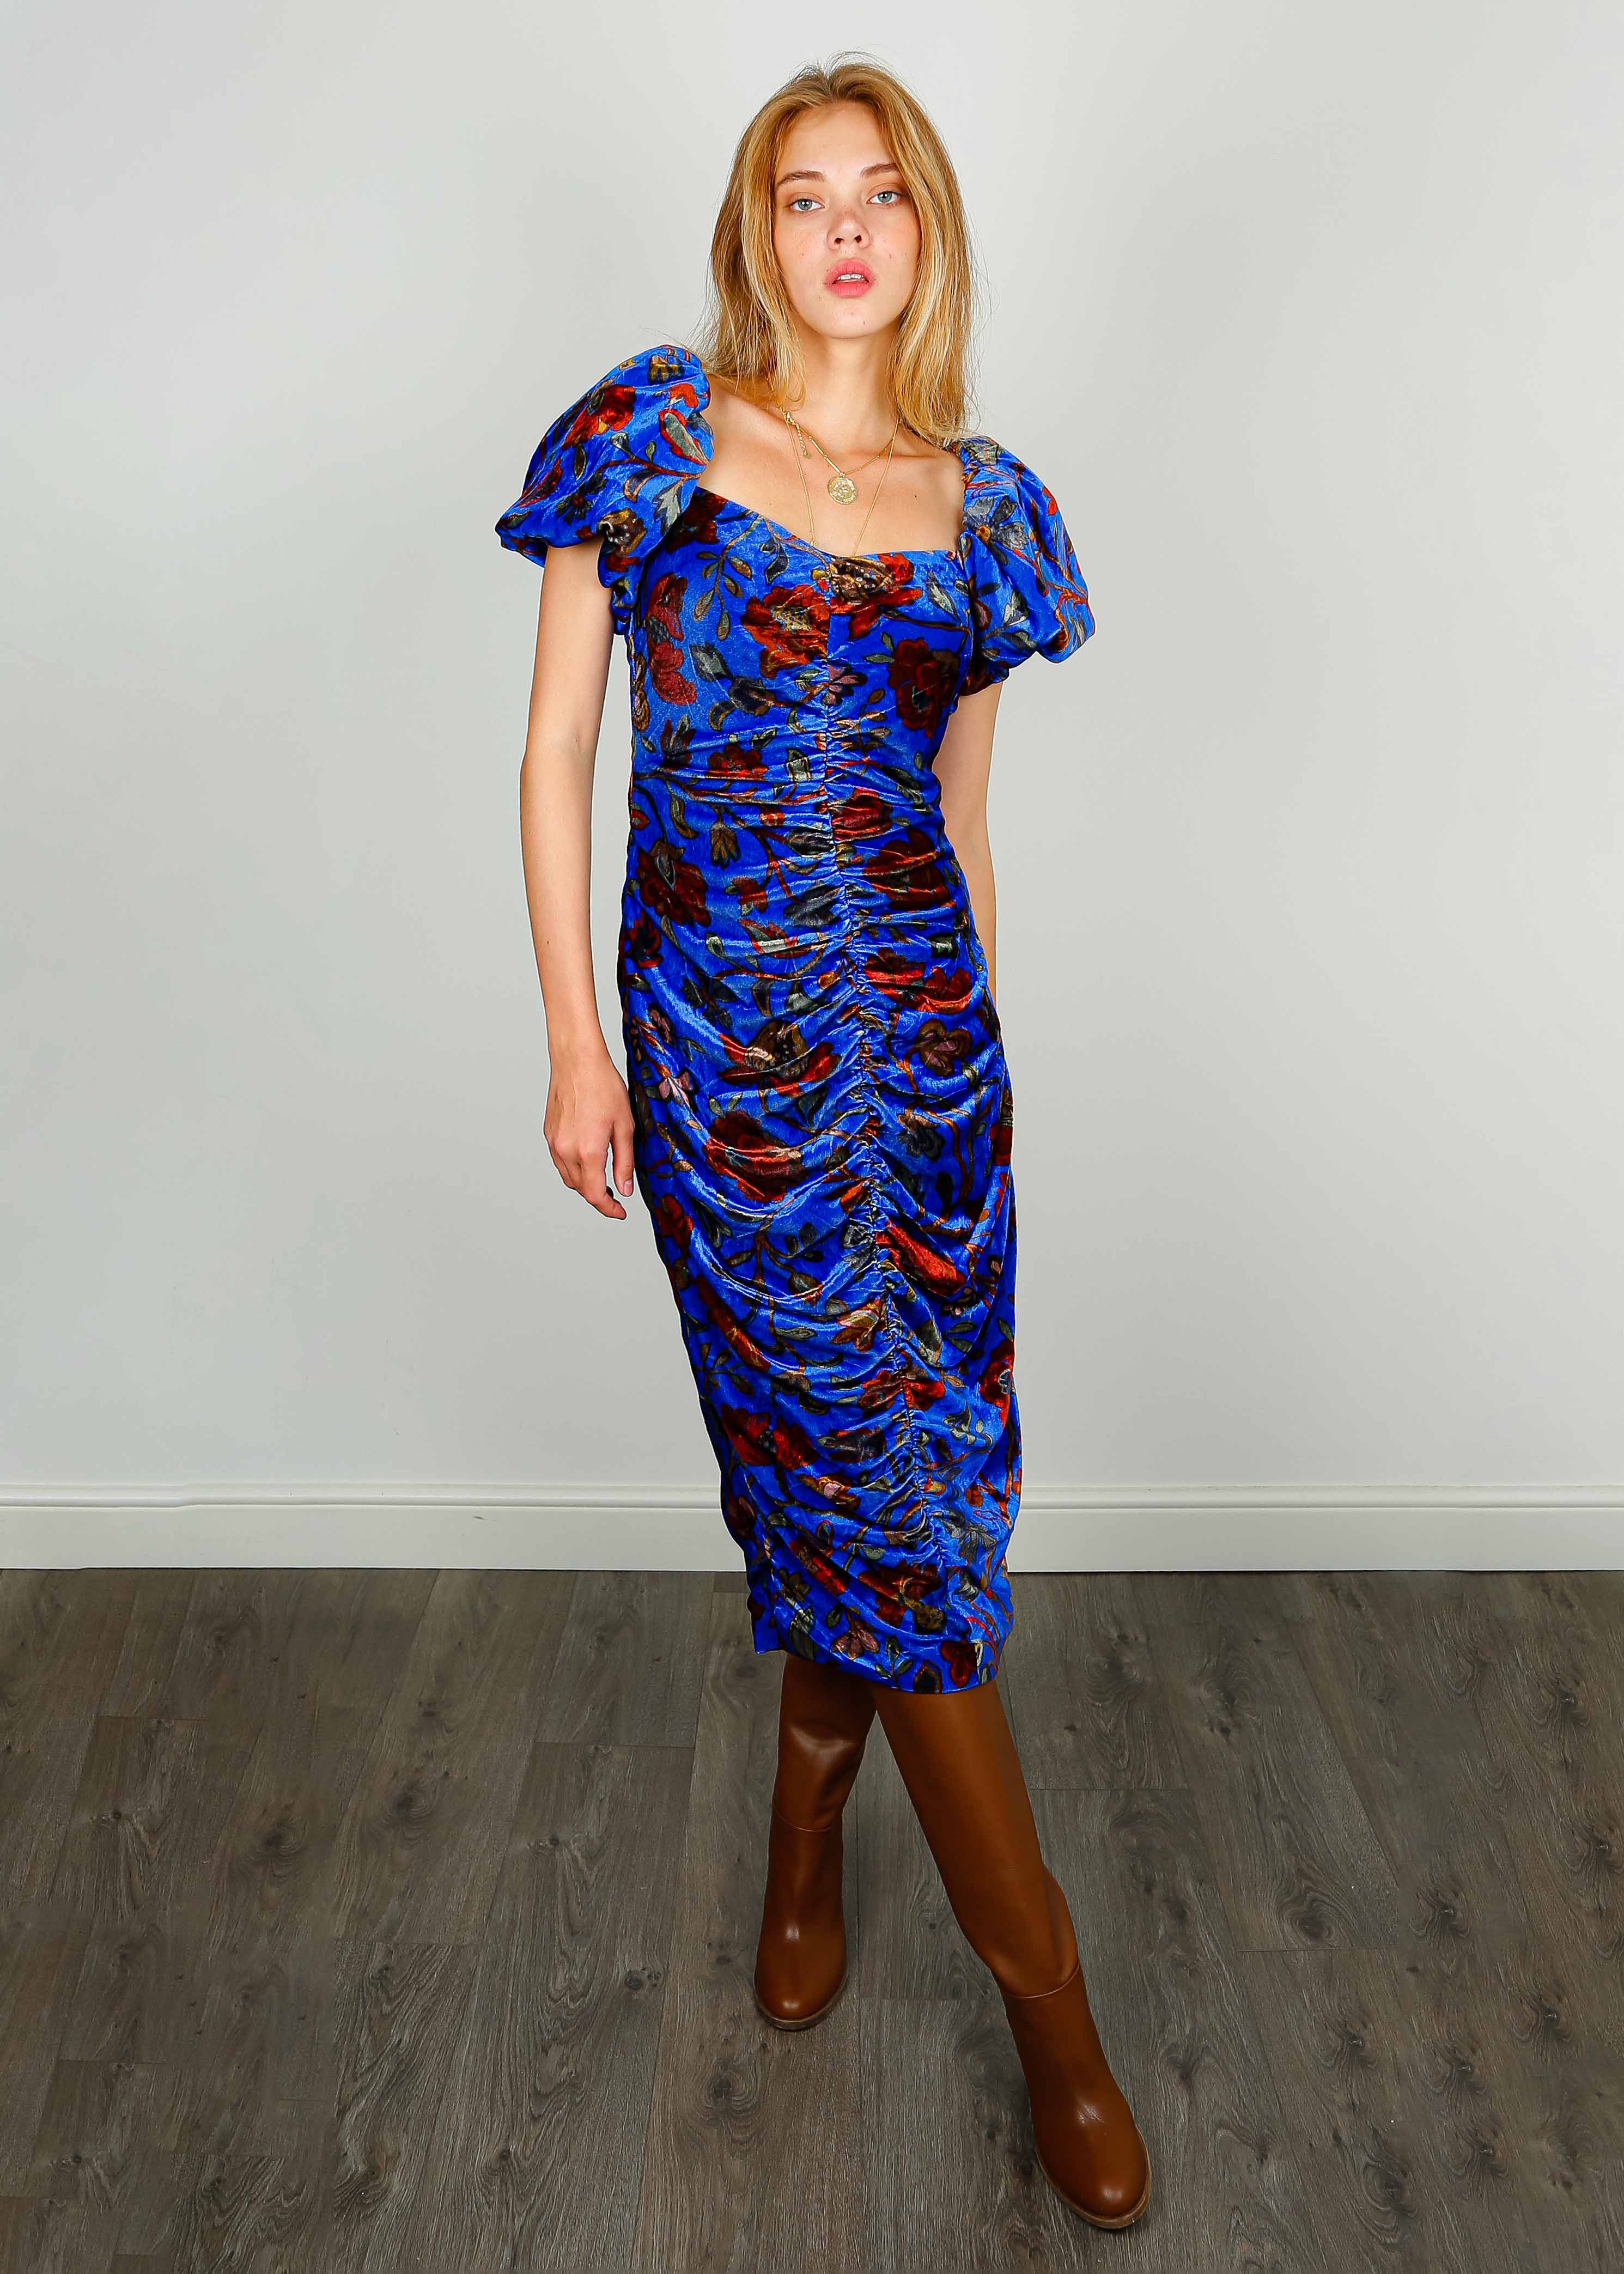 RHODE Tessa Dress in Royal Blue Vichy Rose